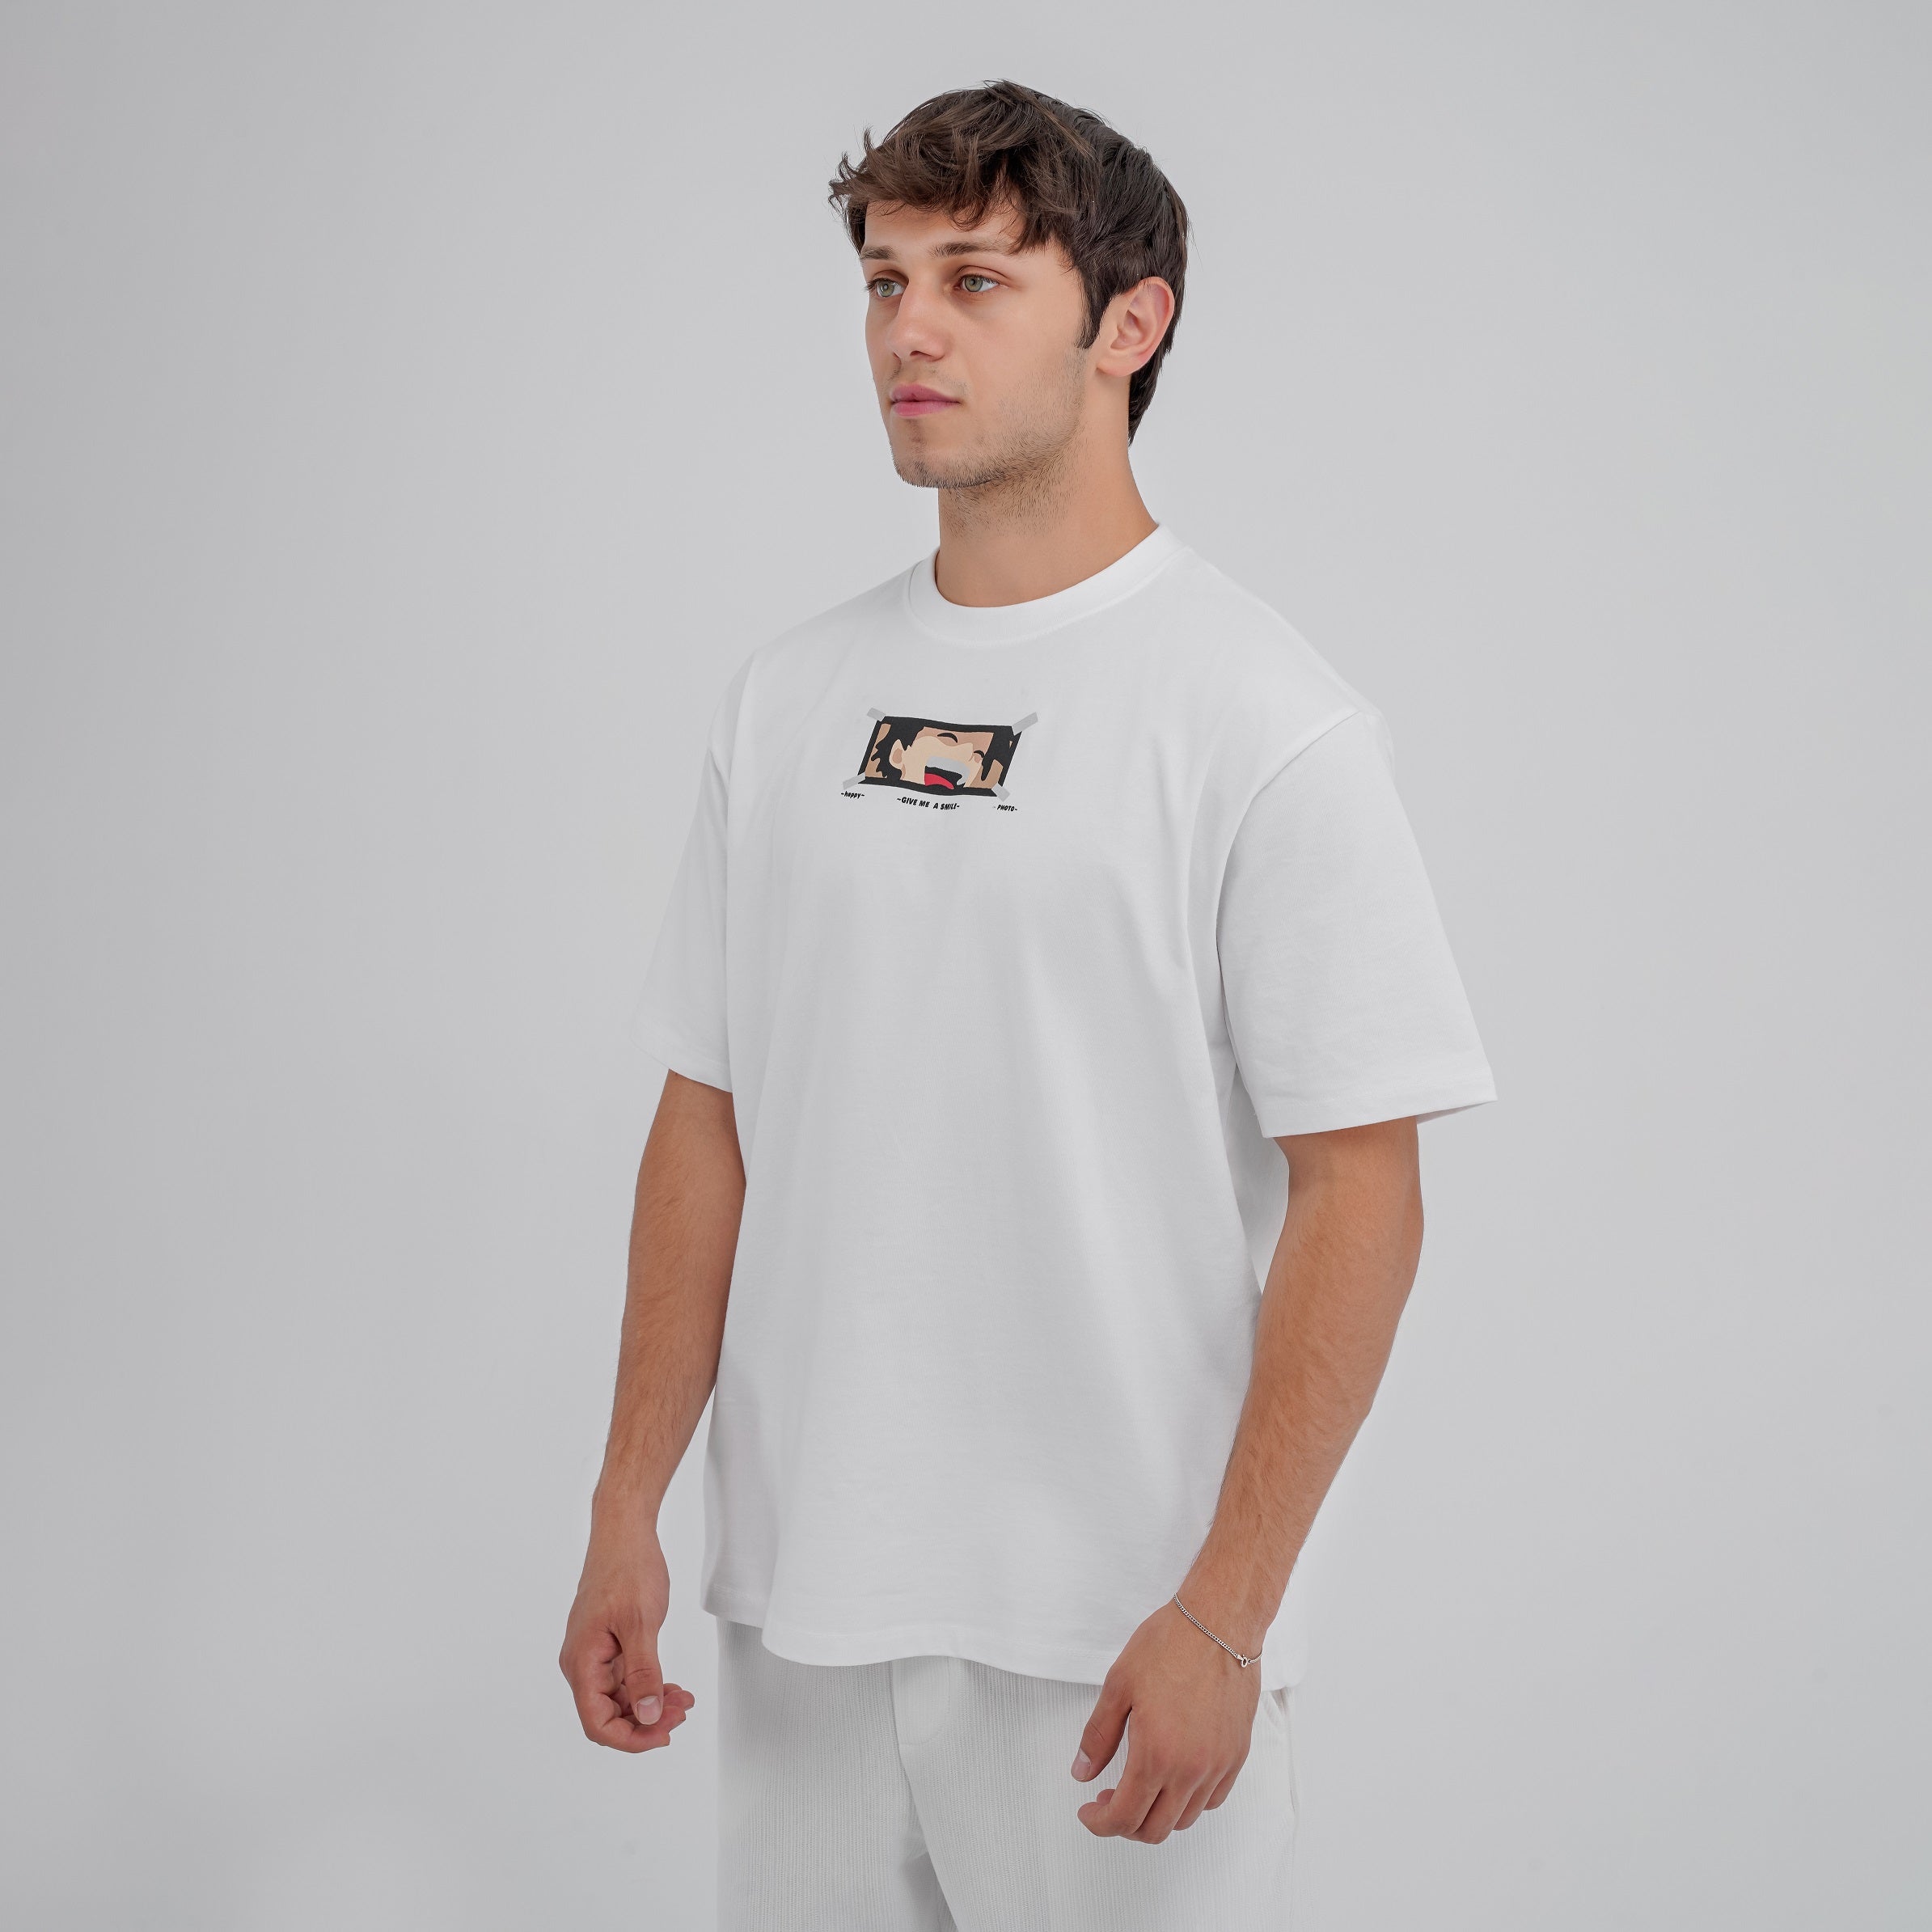 M24TH820 - Oversized Round neck, Printed T-shirt